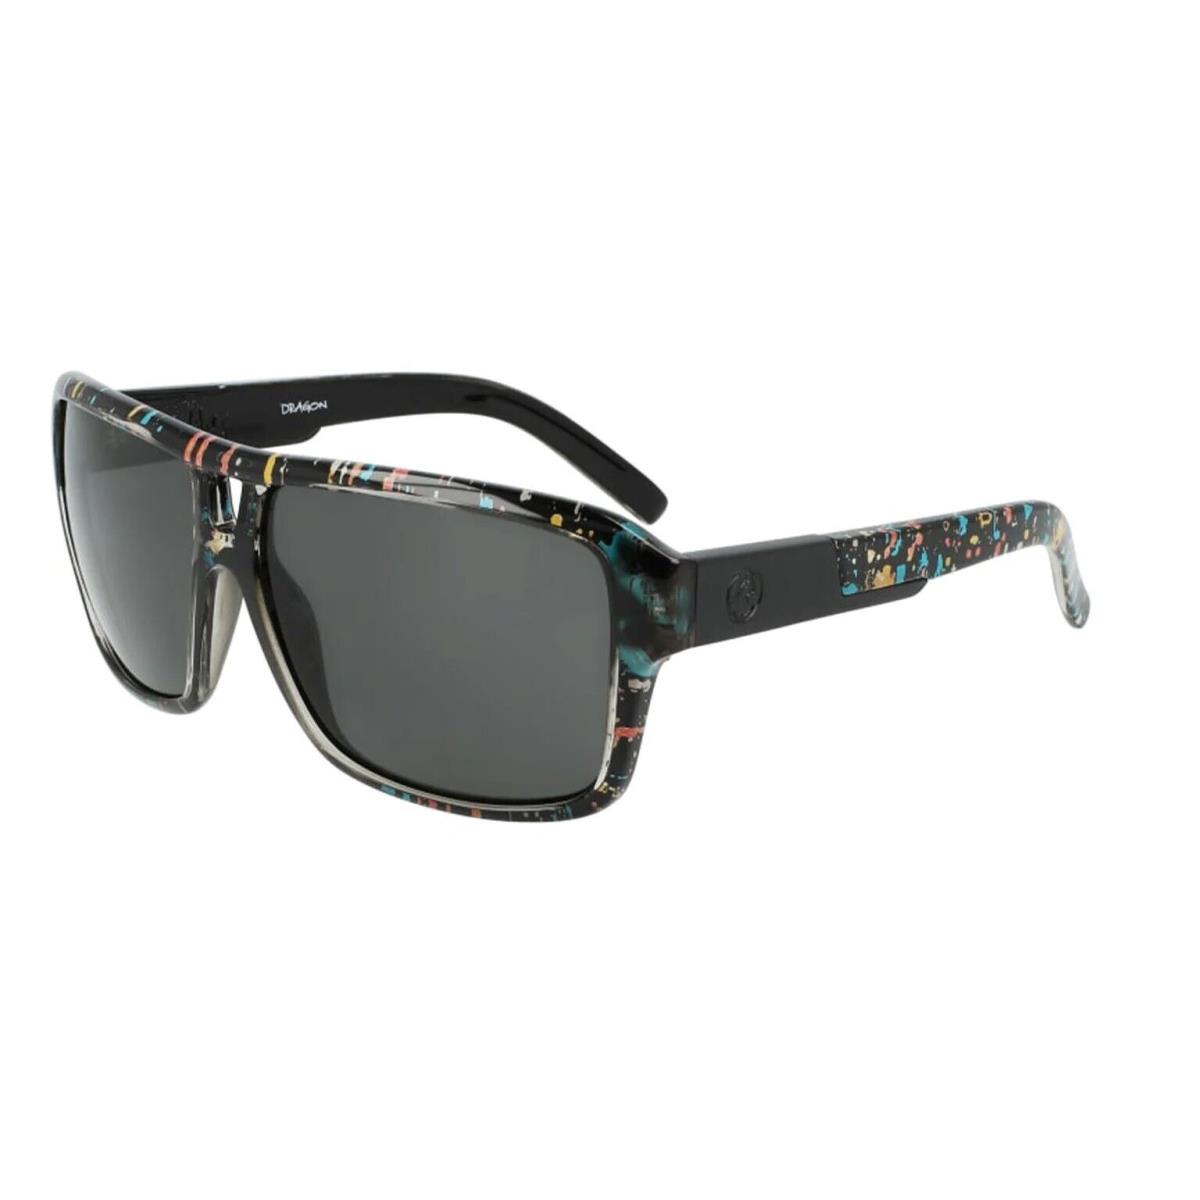 Dragon The Jam Polarized Sunglasses - Black/blue Green Iguchi / Lumalens Smoke - Frame: Black, Lens: Gray